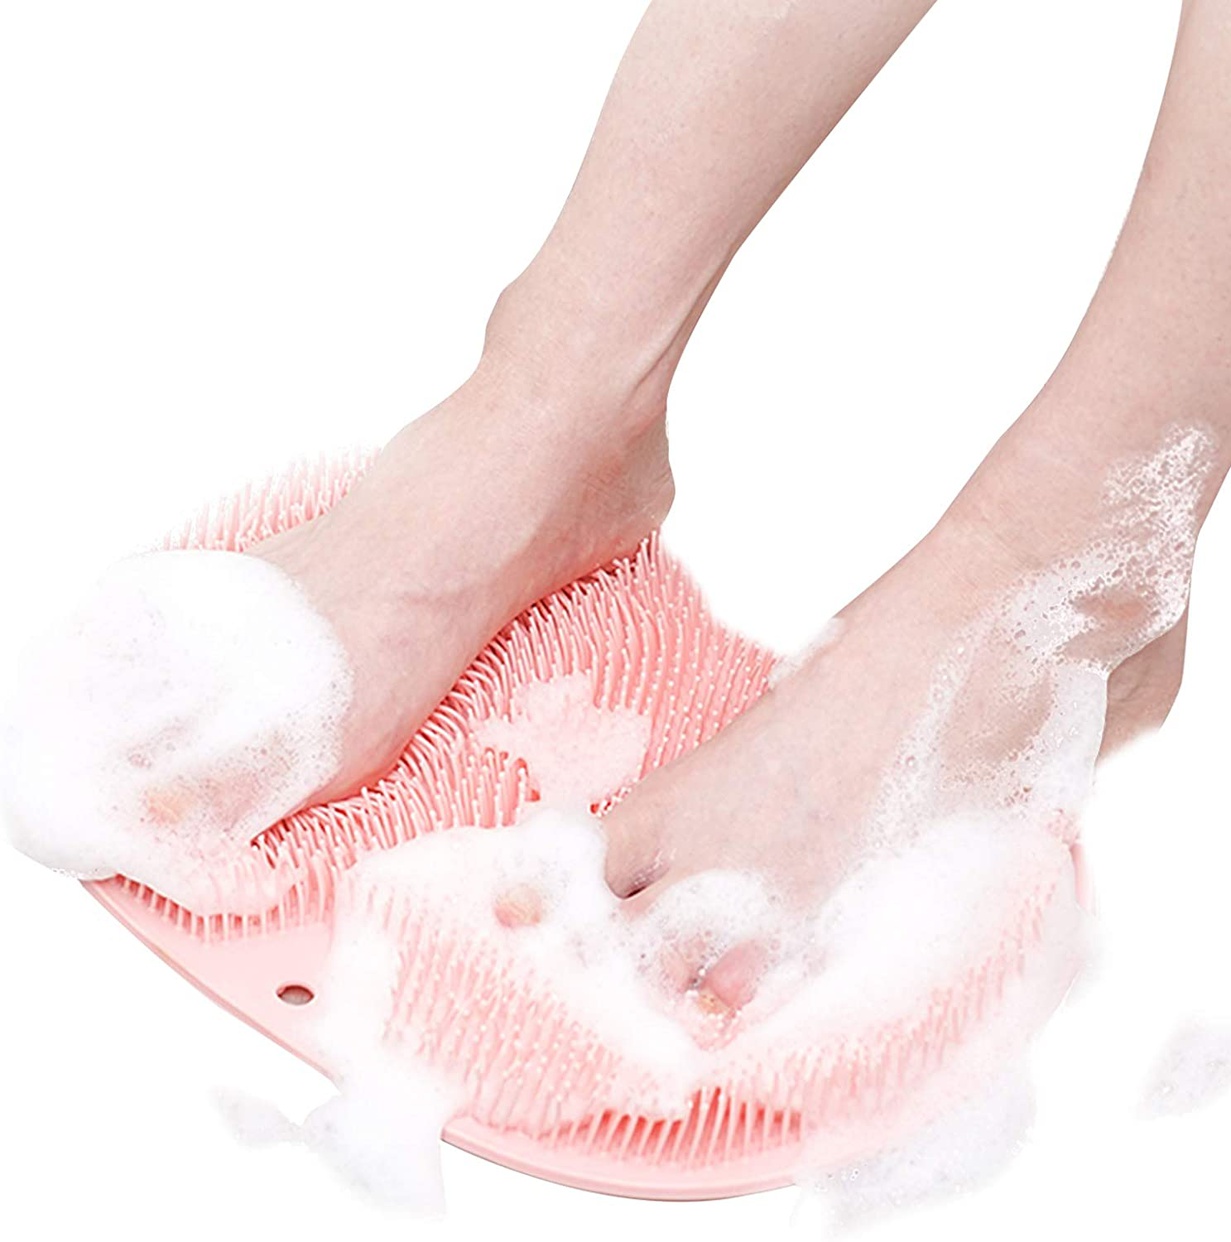 TOYU FREE(トーユーフリー) 足洗いマットの商品画像1 